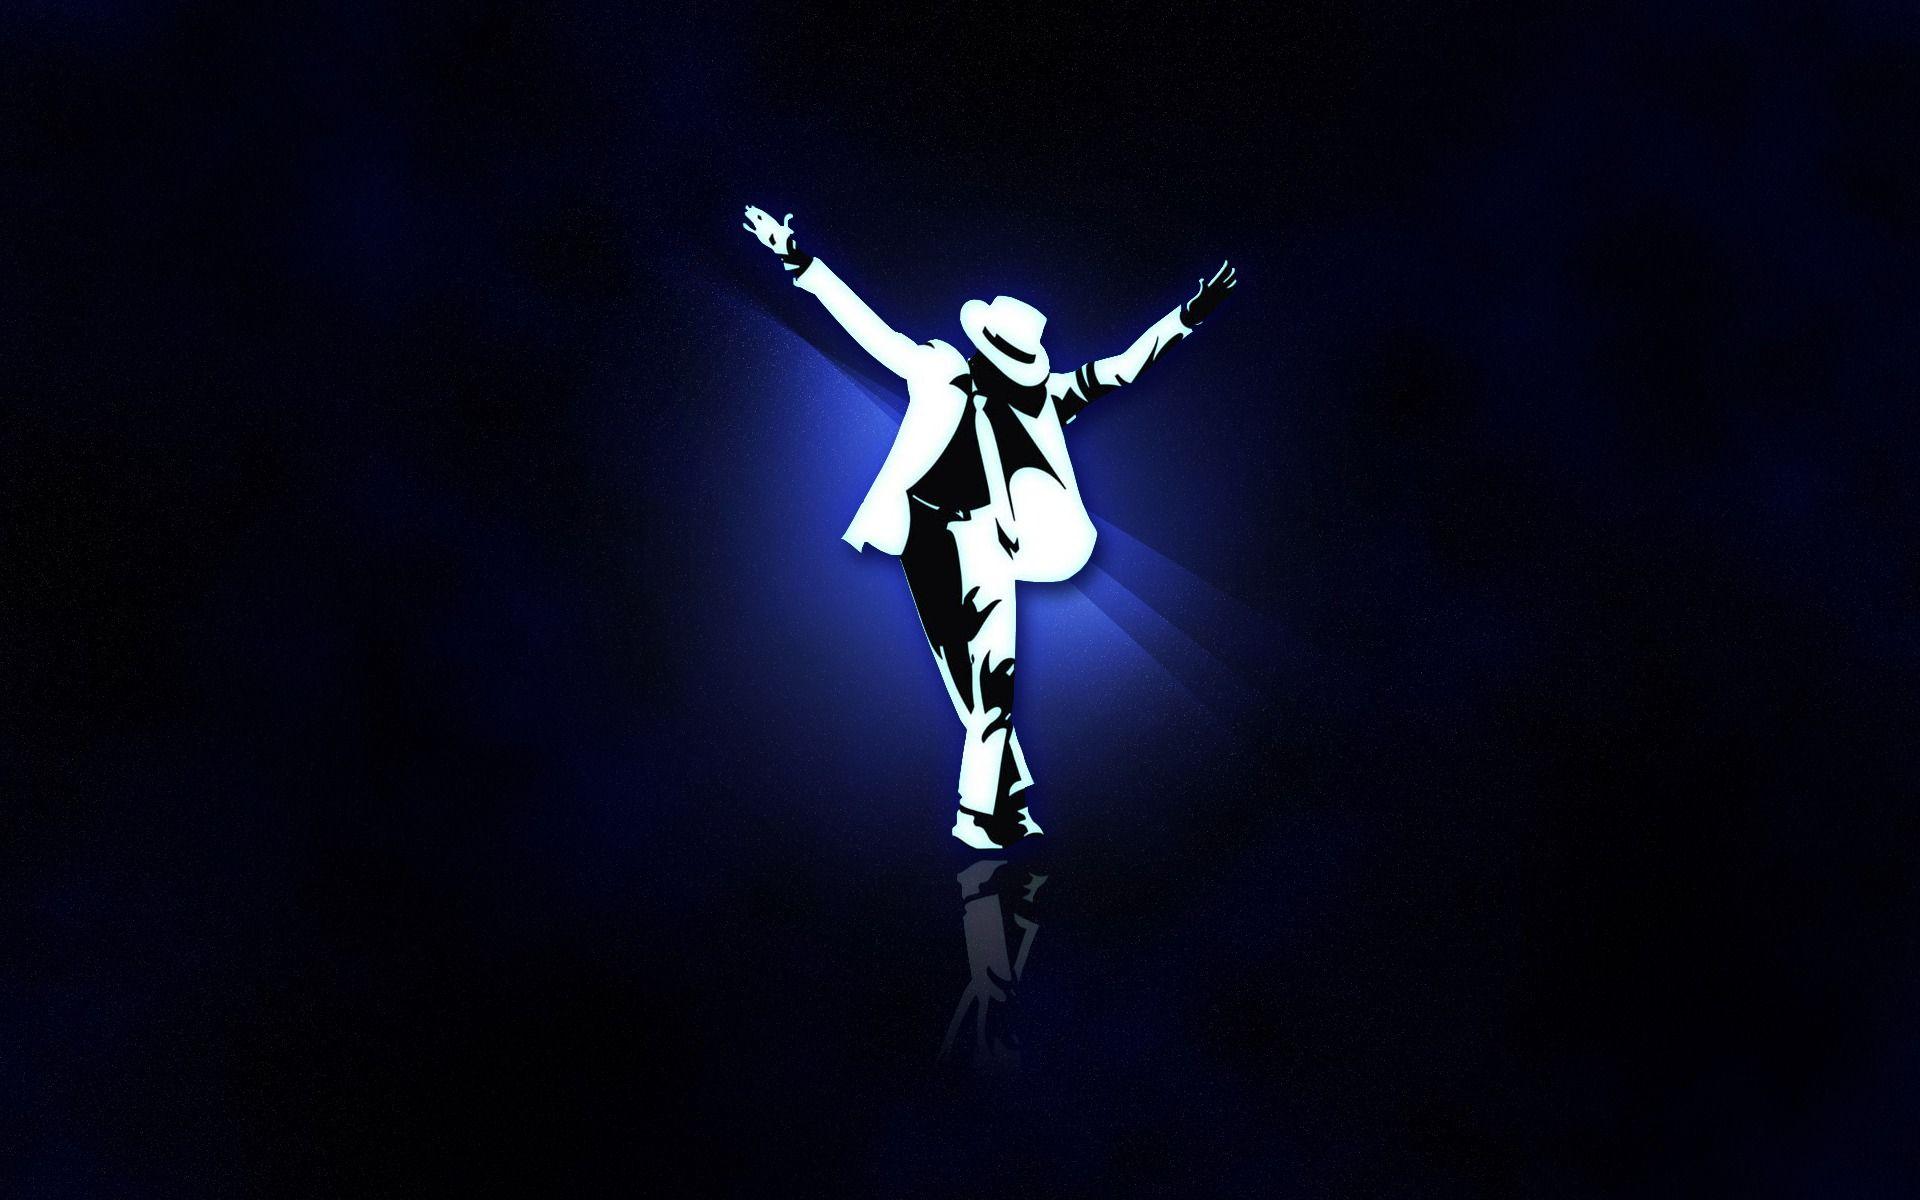 Michael Jackson - Moonwalker by 003ismail on DeviantArt